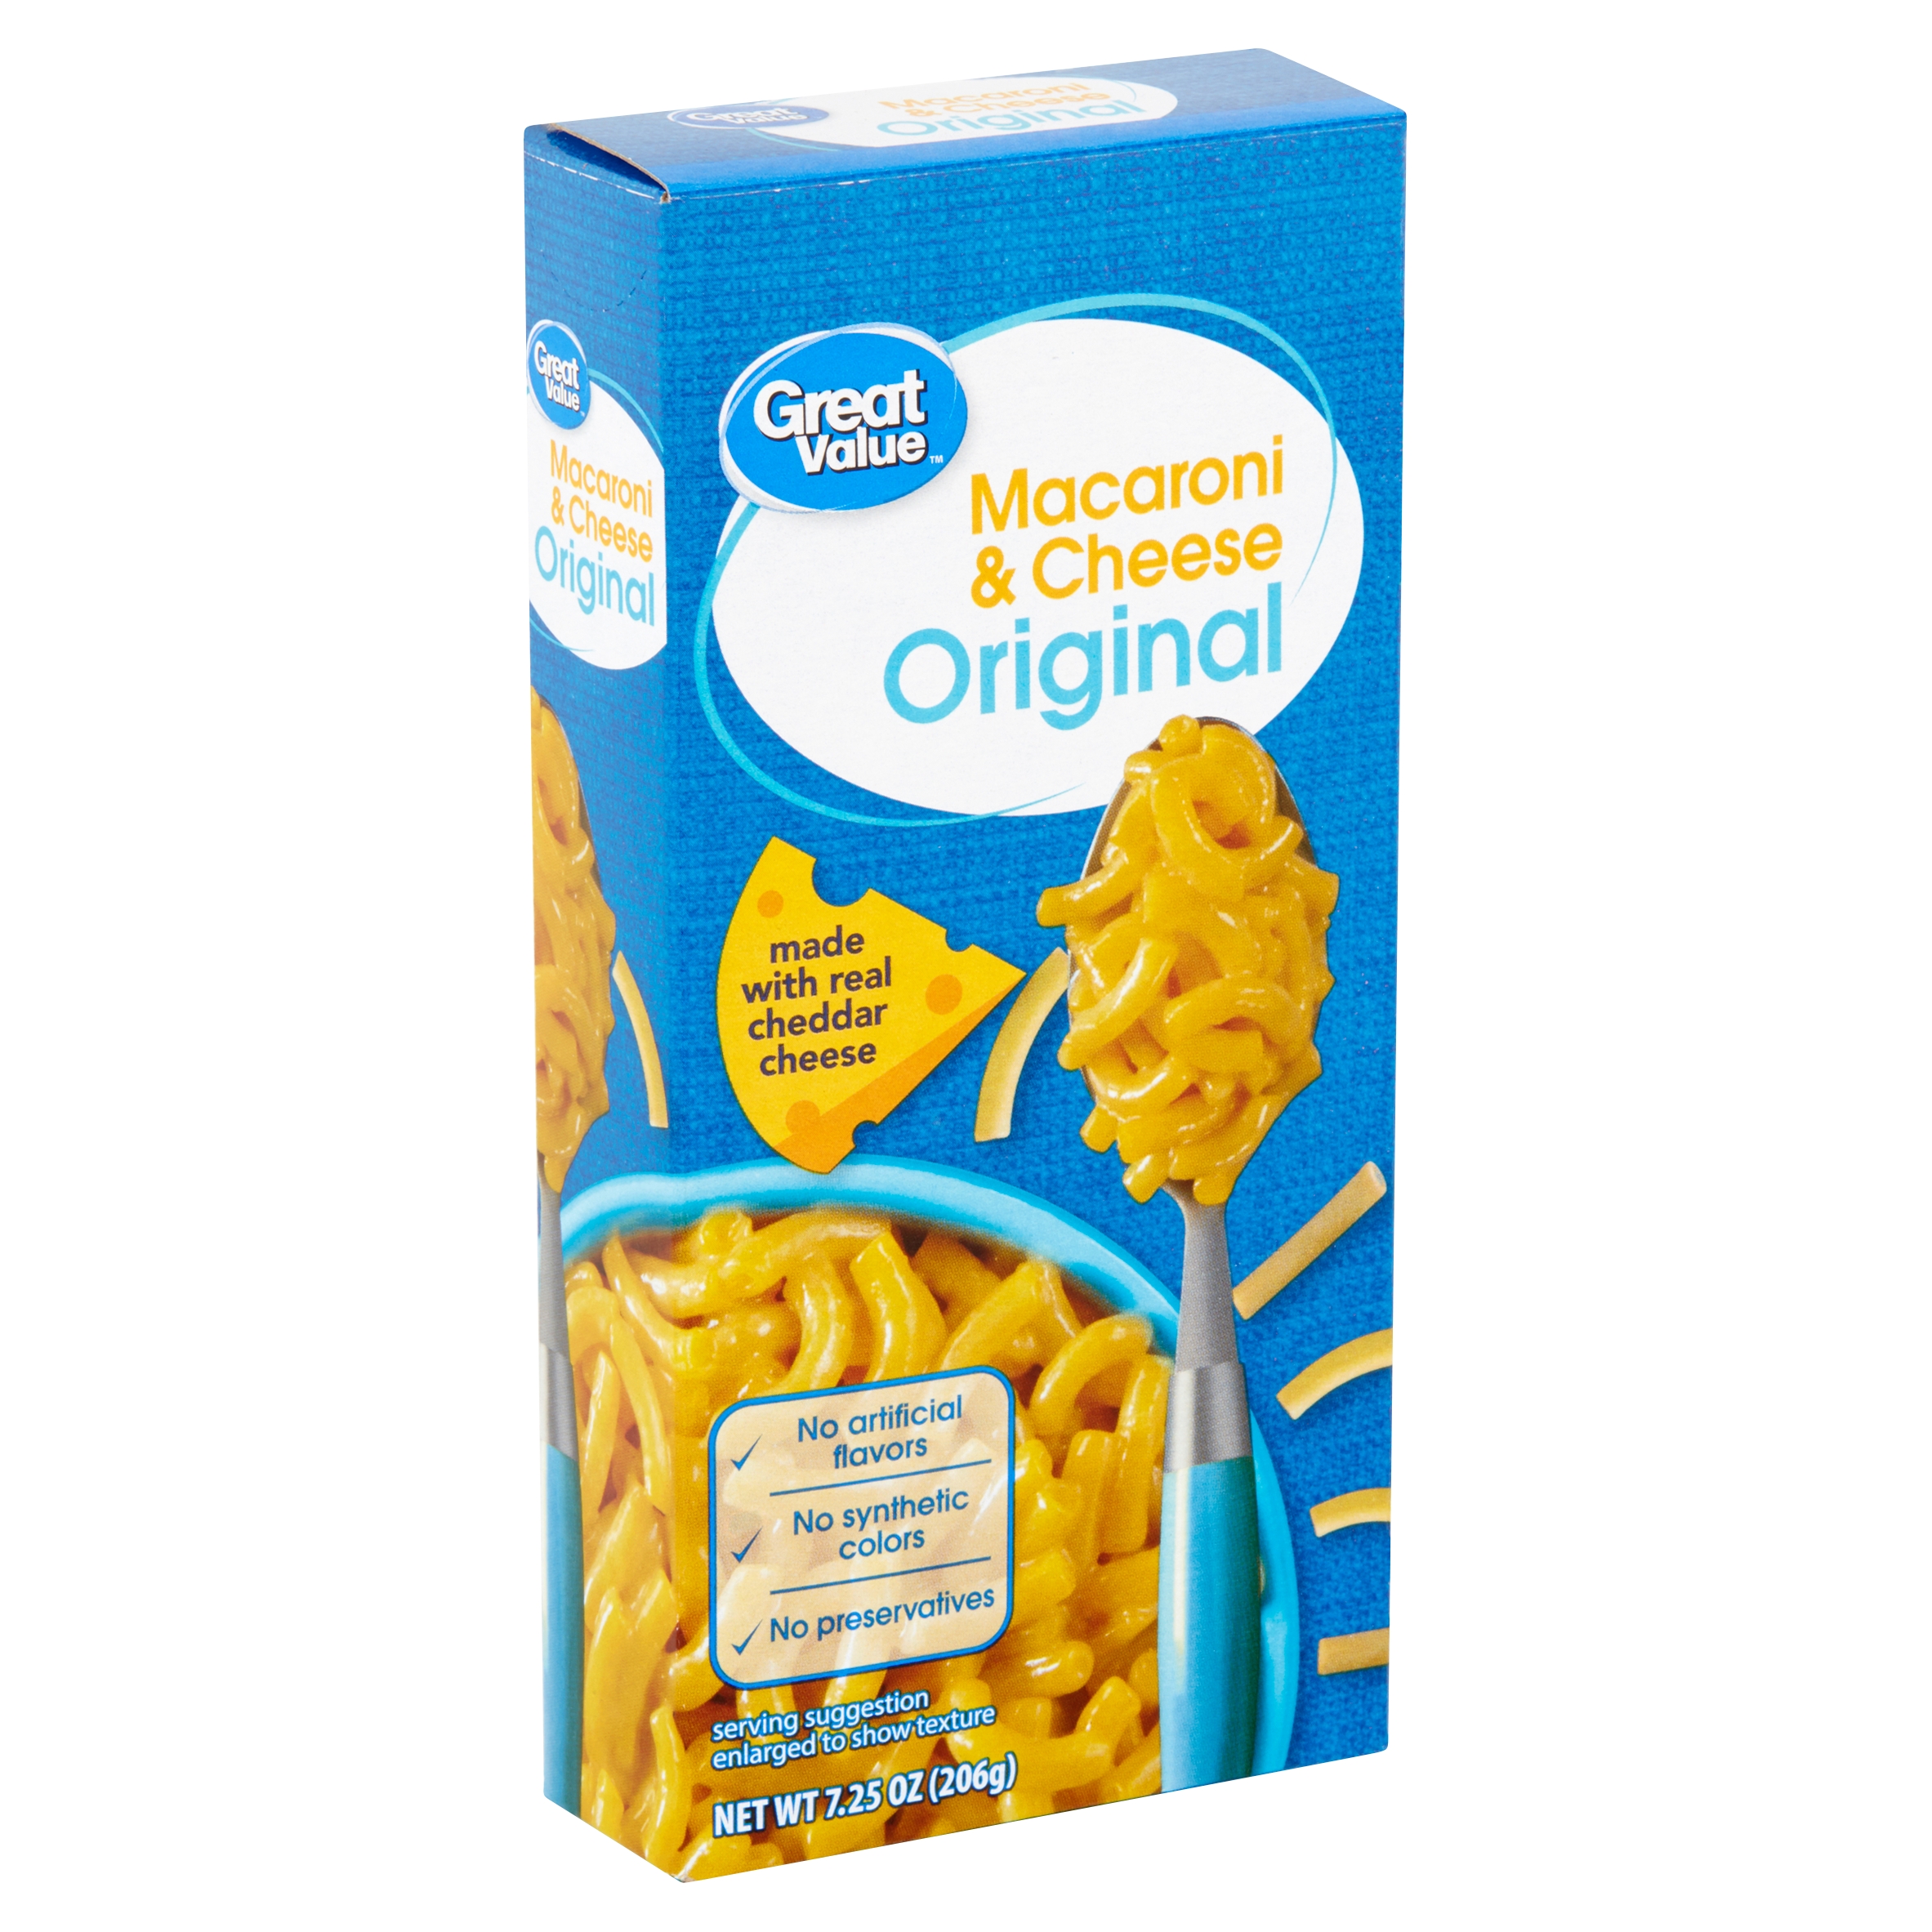 Great Value Original Macaroni & Cheese, 7.25 Oz Image